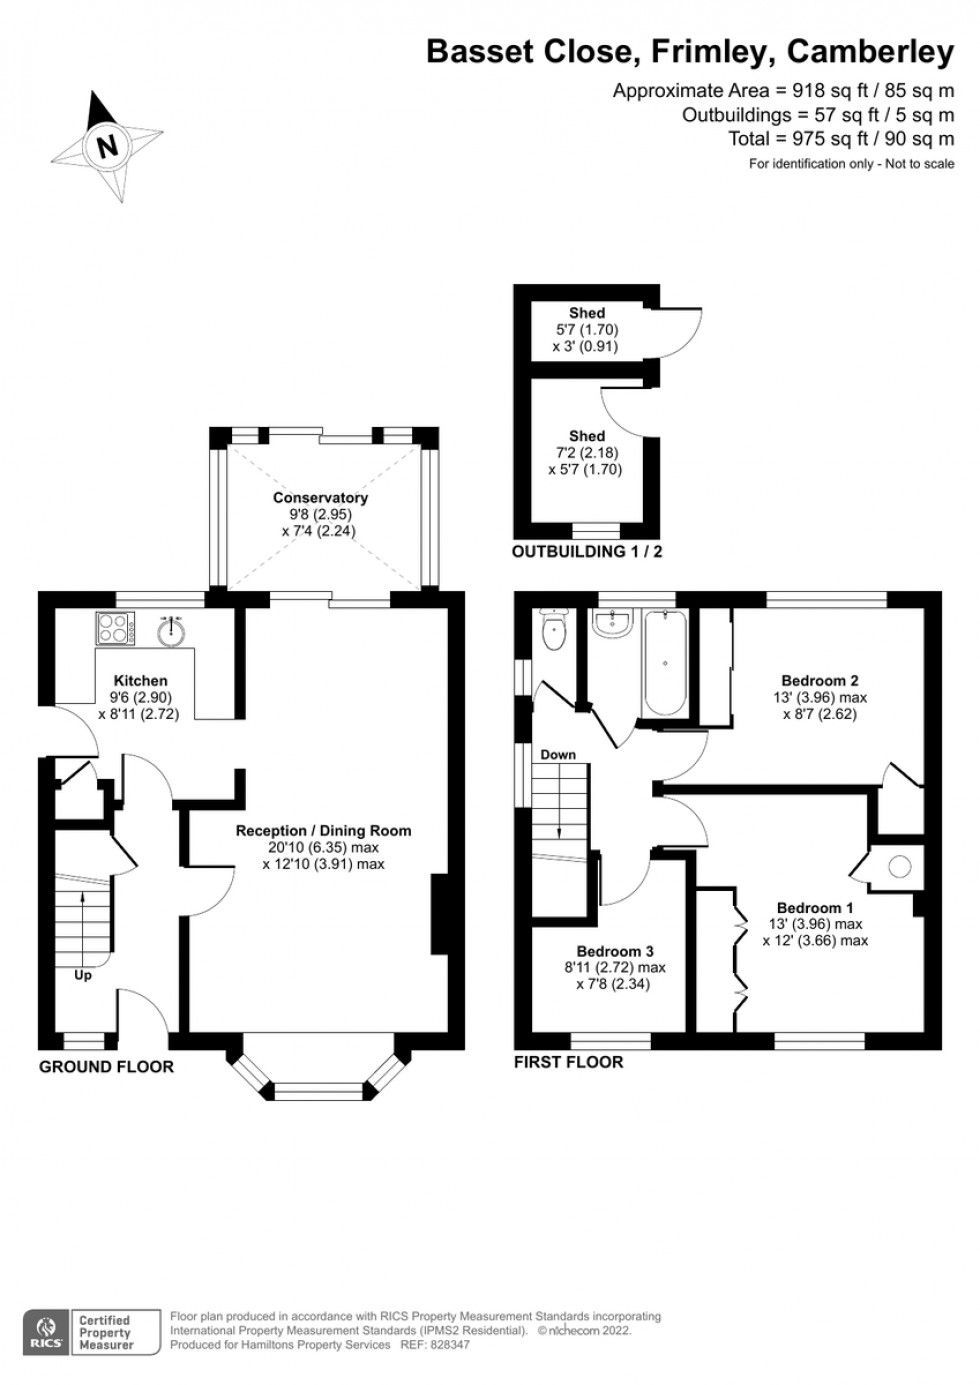 Floorplan for Basset Close, Frimley